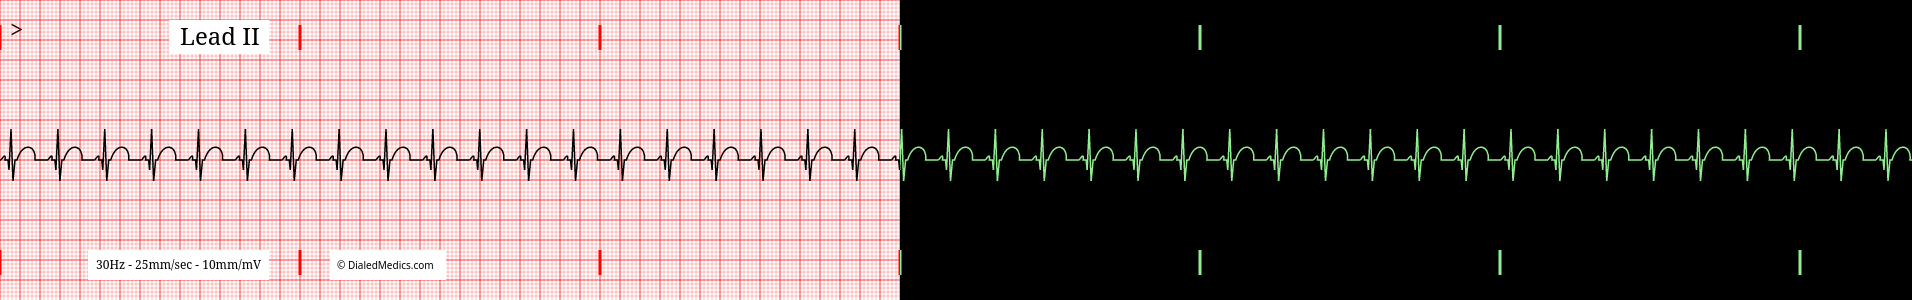 Sinus Tachycardia ECG example, split printout / monitor display.